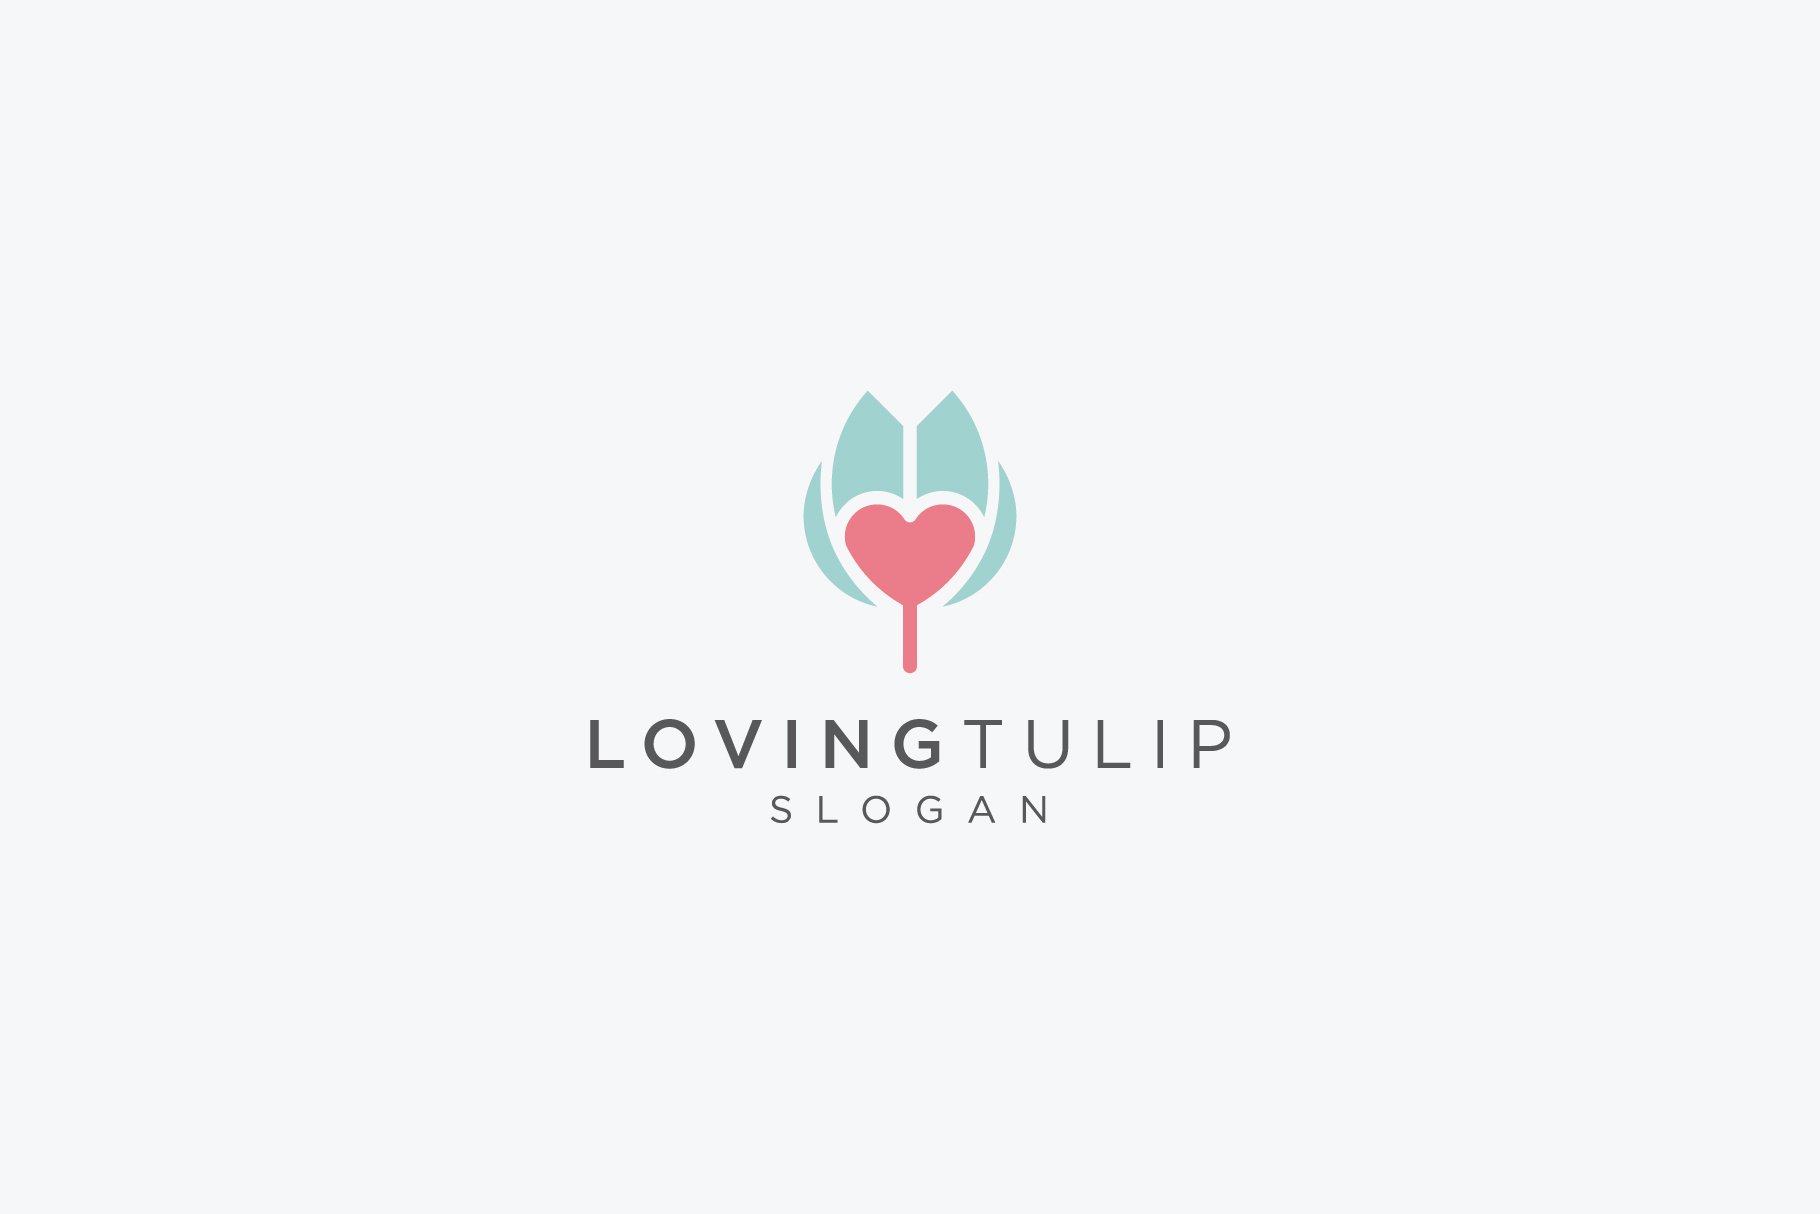 Loving Tulip Logo cover image.